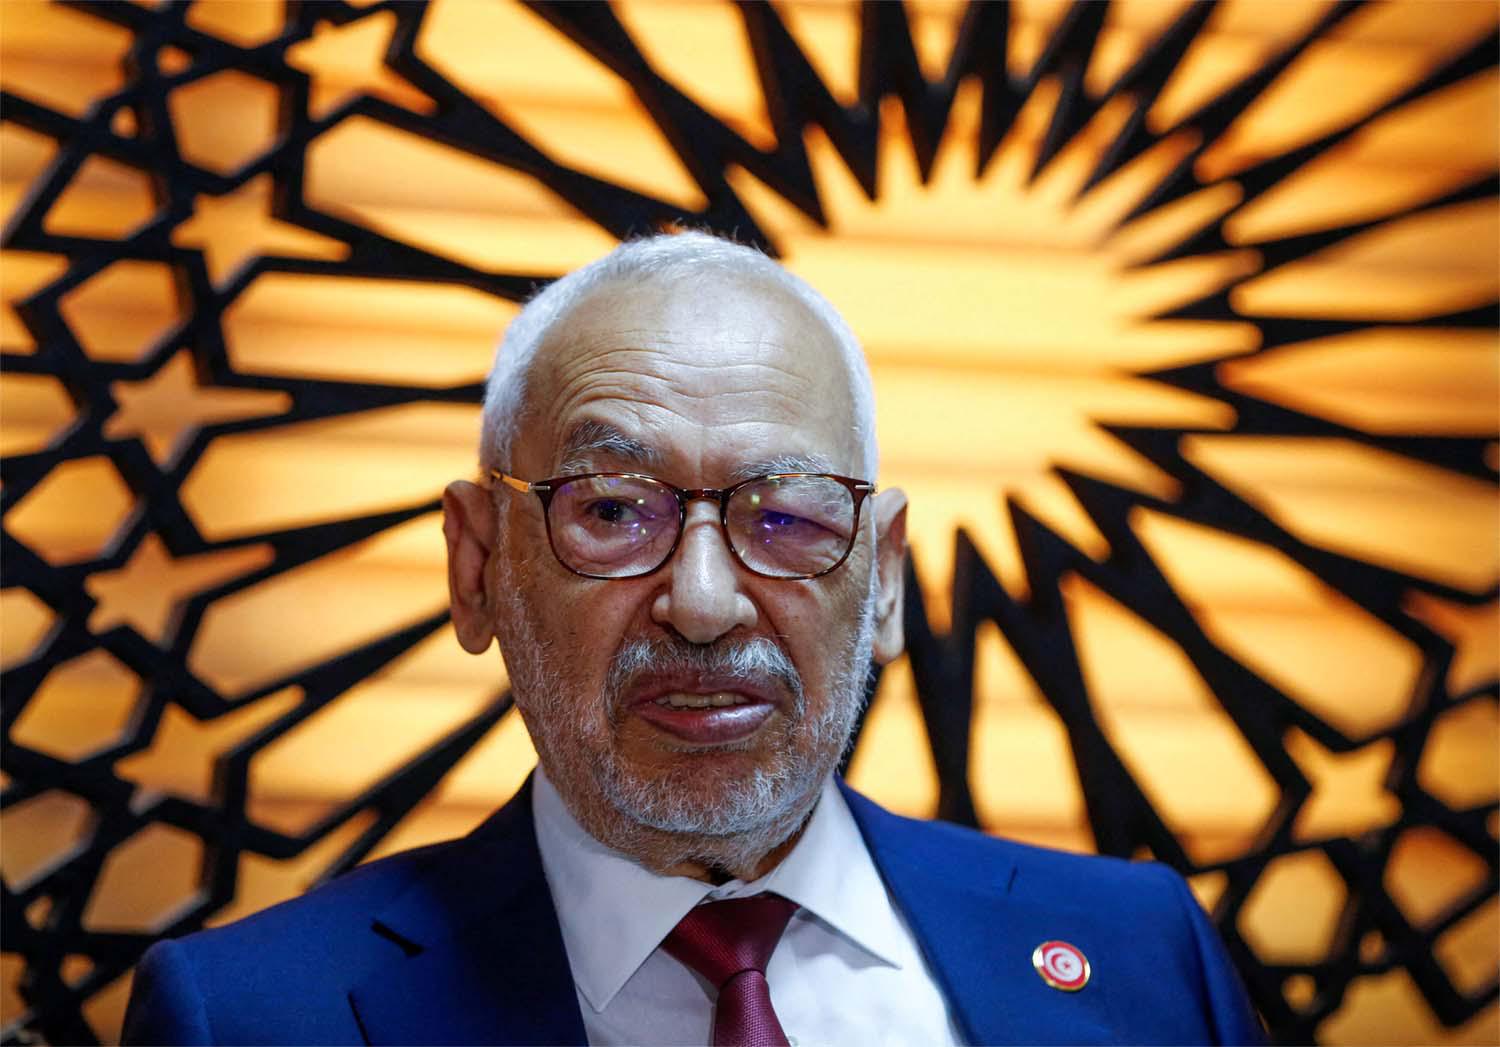 The court also imprisoned Ghannouchi’s son-in-law Rafik Abdessalem